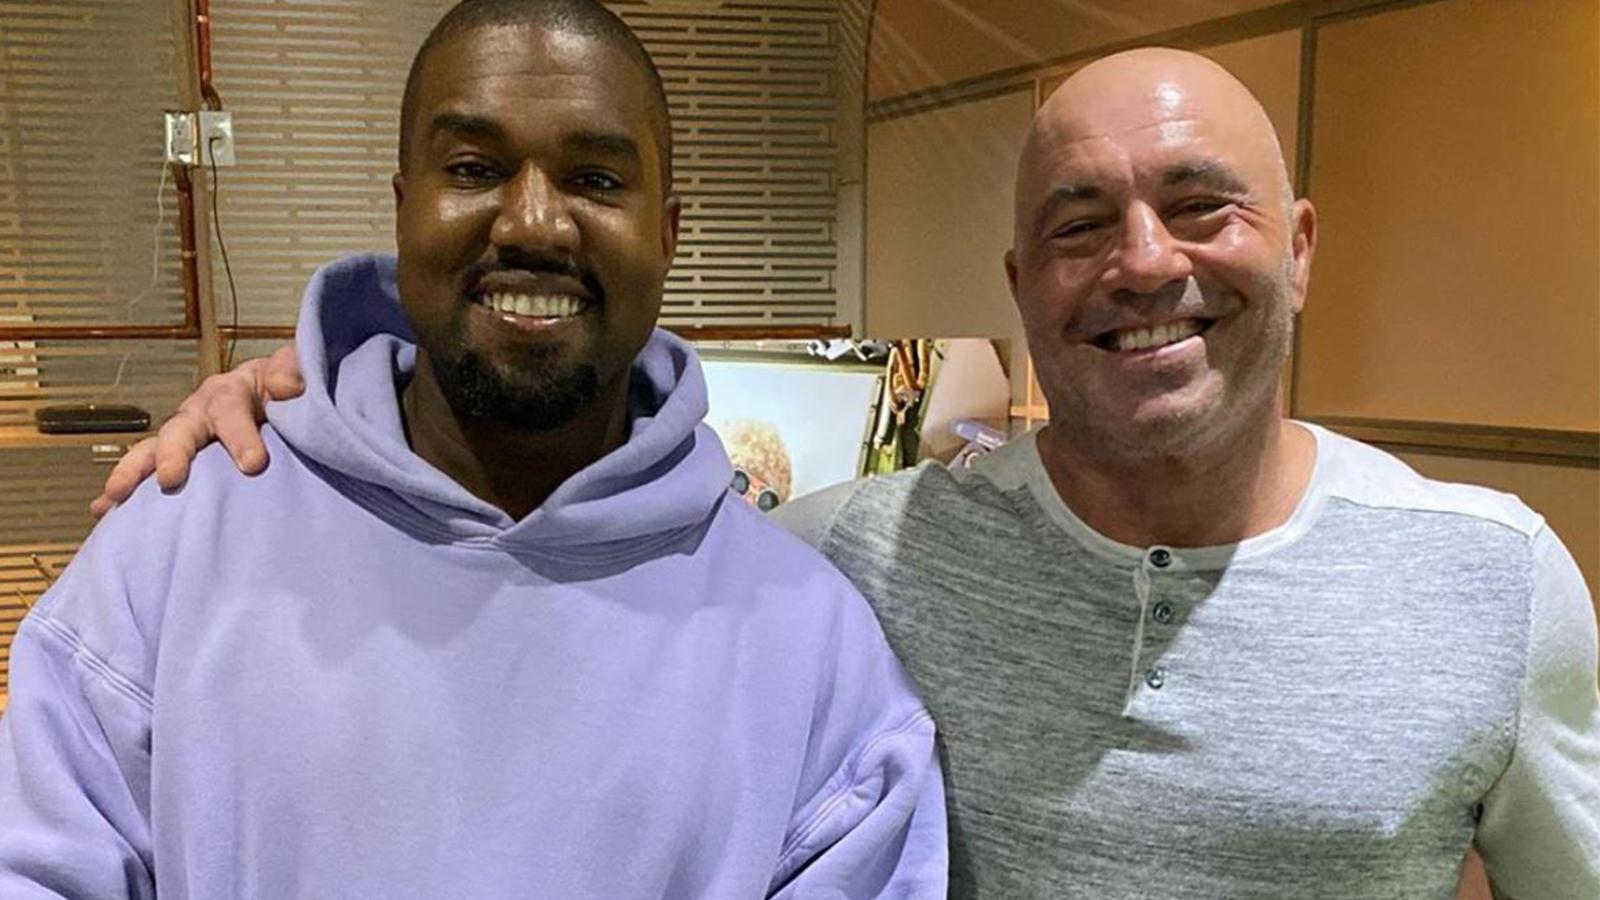 Joe Rogan and Kanye West embrace in a cheerful photo.